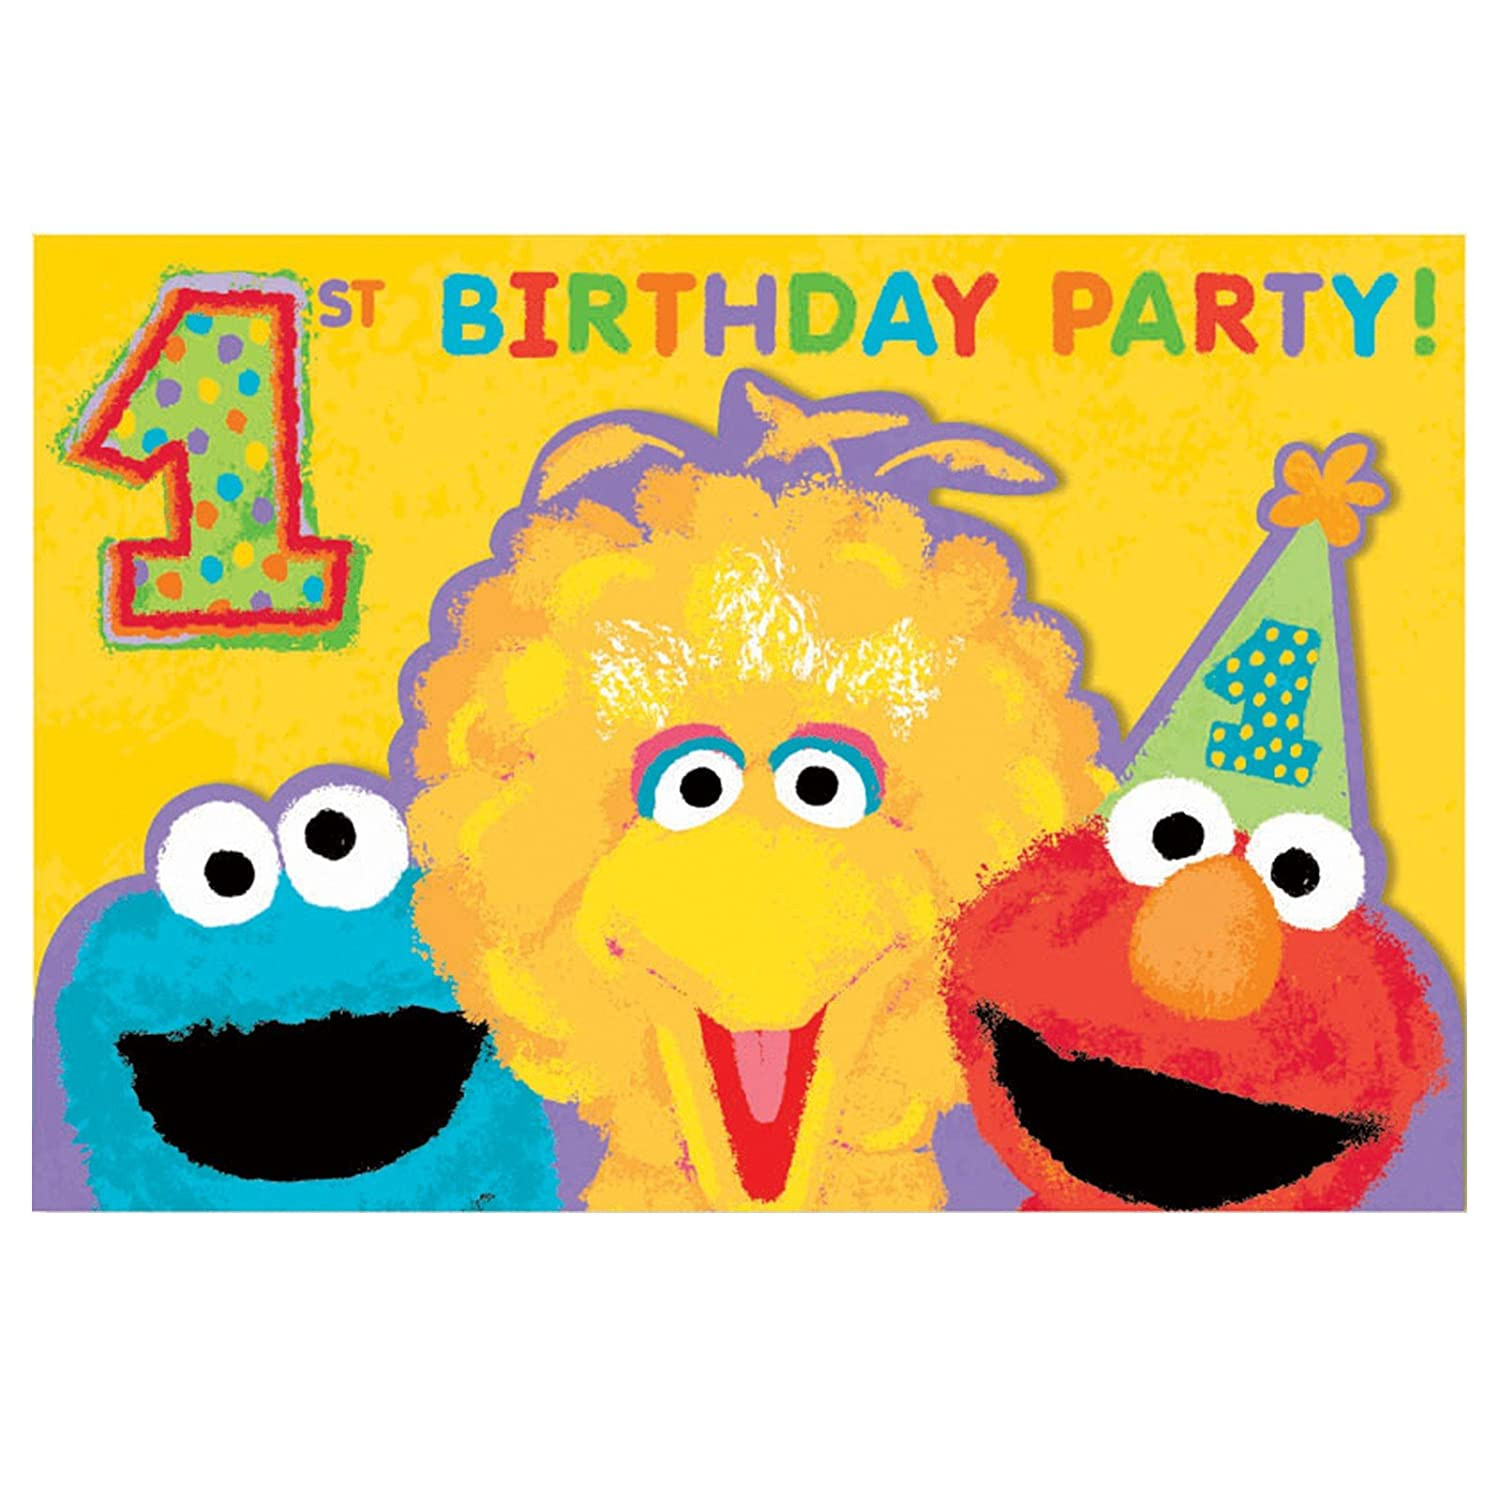 Sesame Street 1st Birthday Party Supplies
 Sesame Street First Birthday Party Supplies